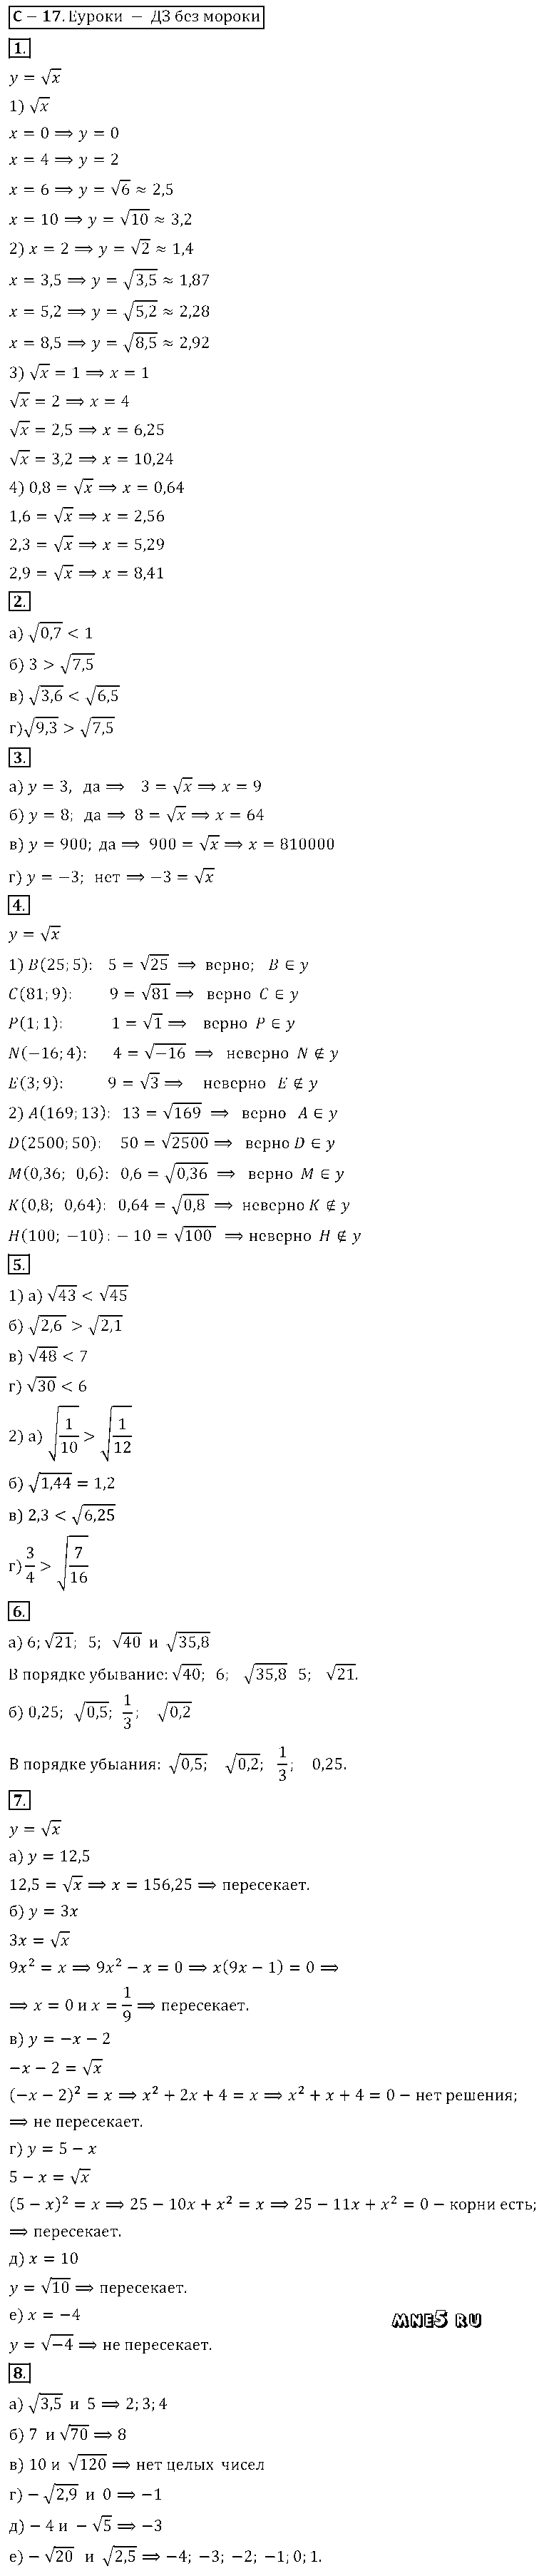 ГДЗ Алгебра 8 класс - С-17(17). Функция y = √x